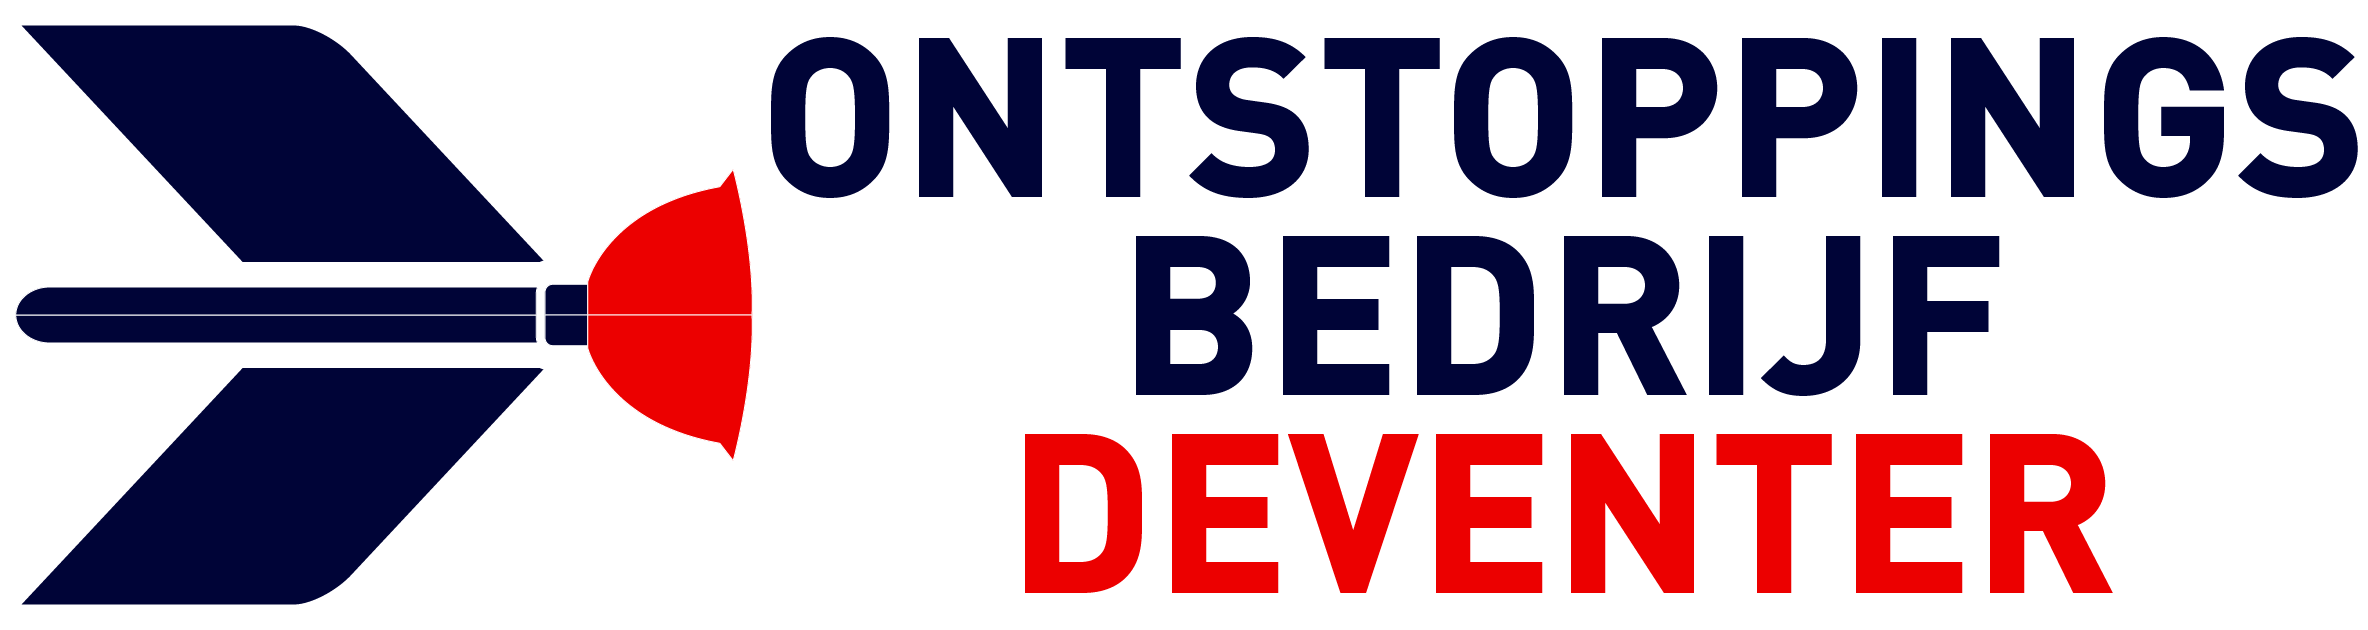 Ontstoppingsbedrijf Deventer logo